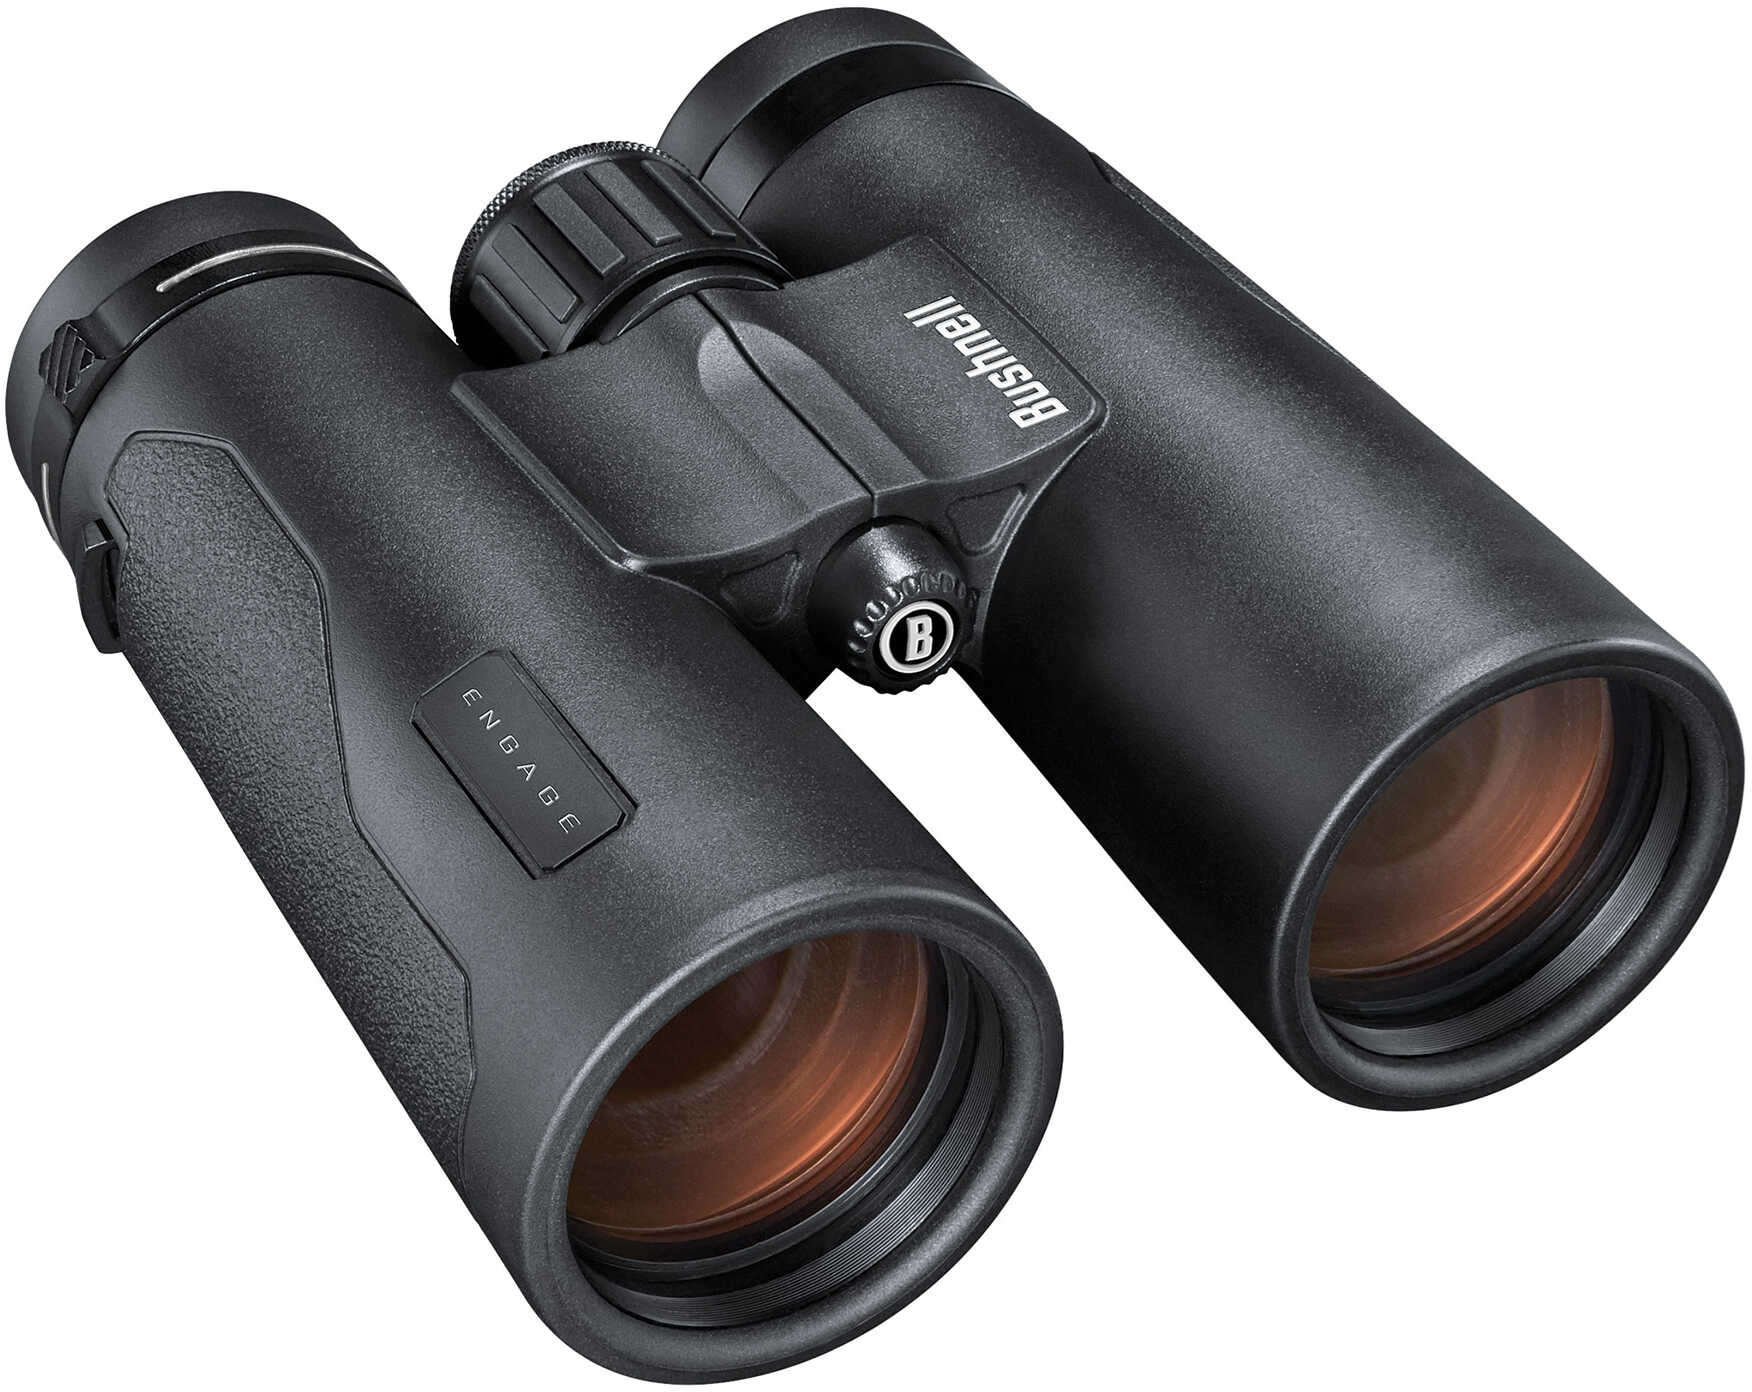 Bushnell Engage Binoculars 8x42mm, Roof Prism, Black